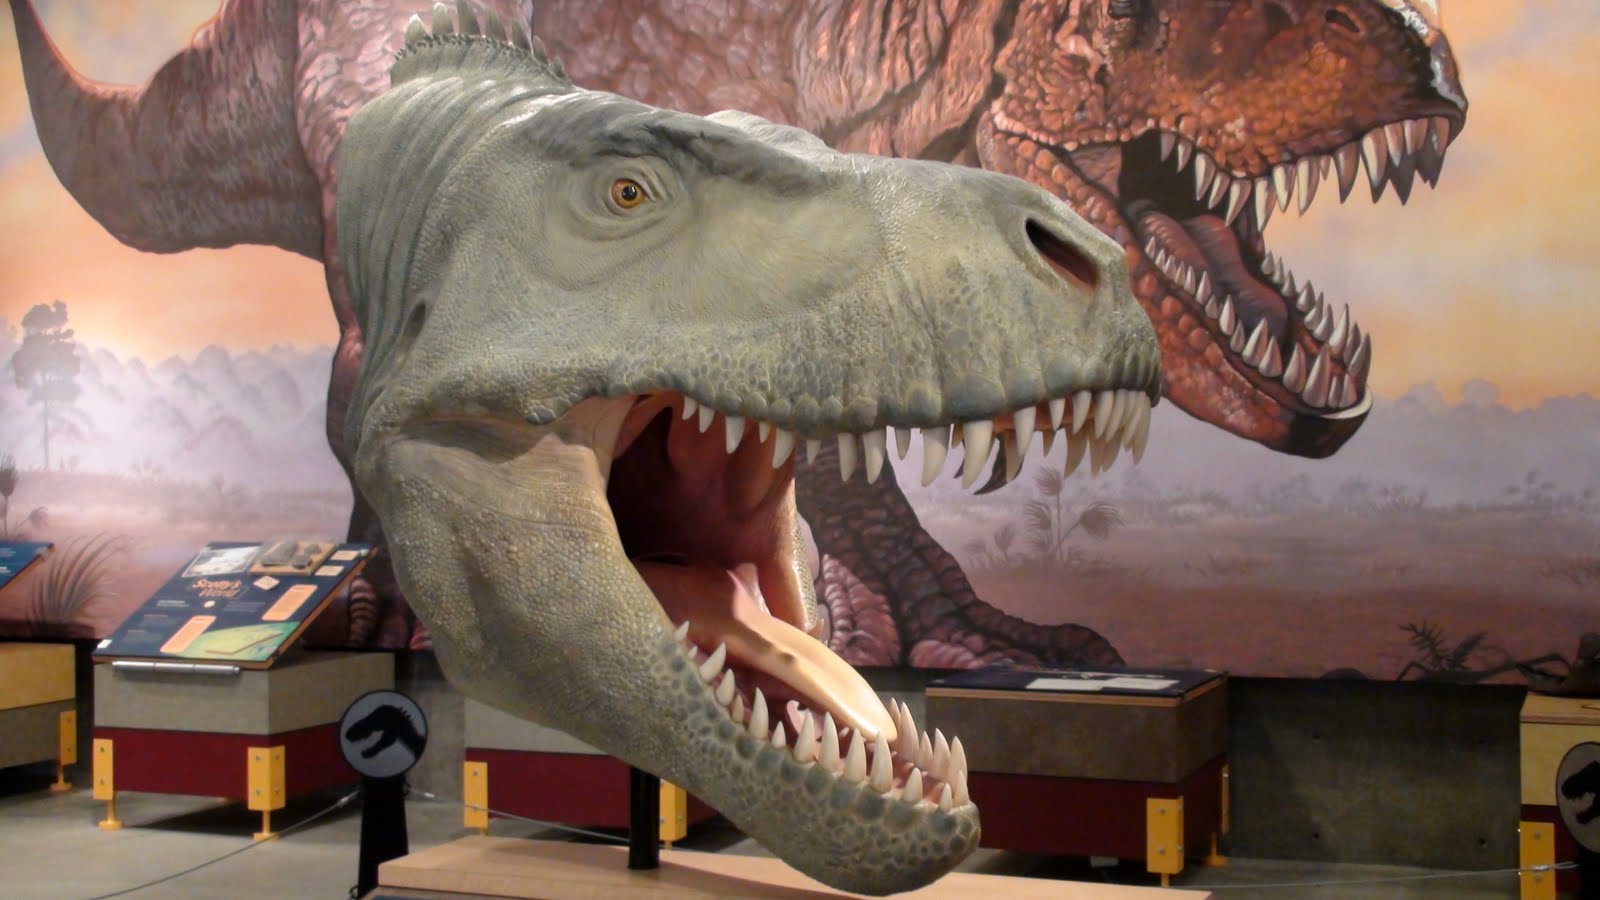 Canadian dinosaur named 'Scotty' named world's biggest T. rex